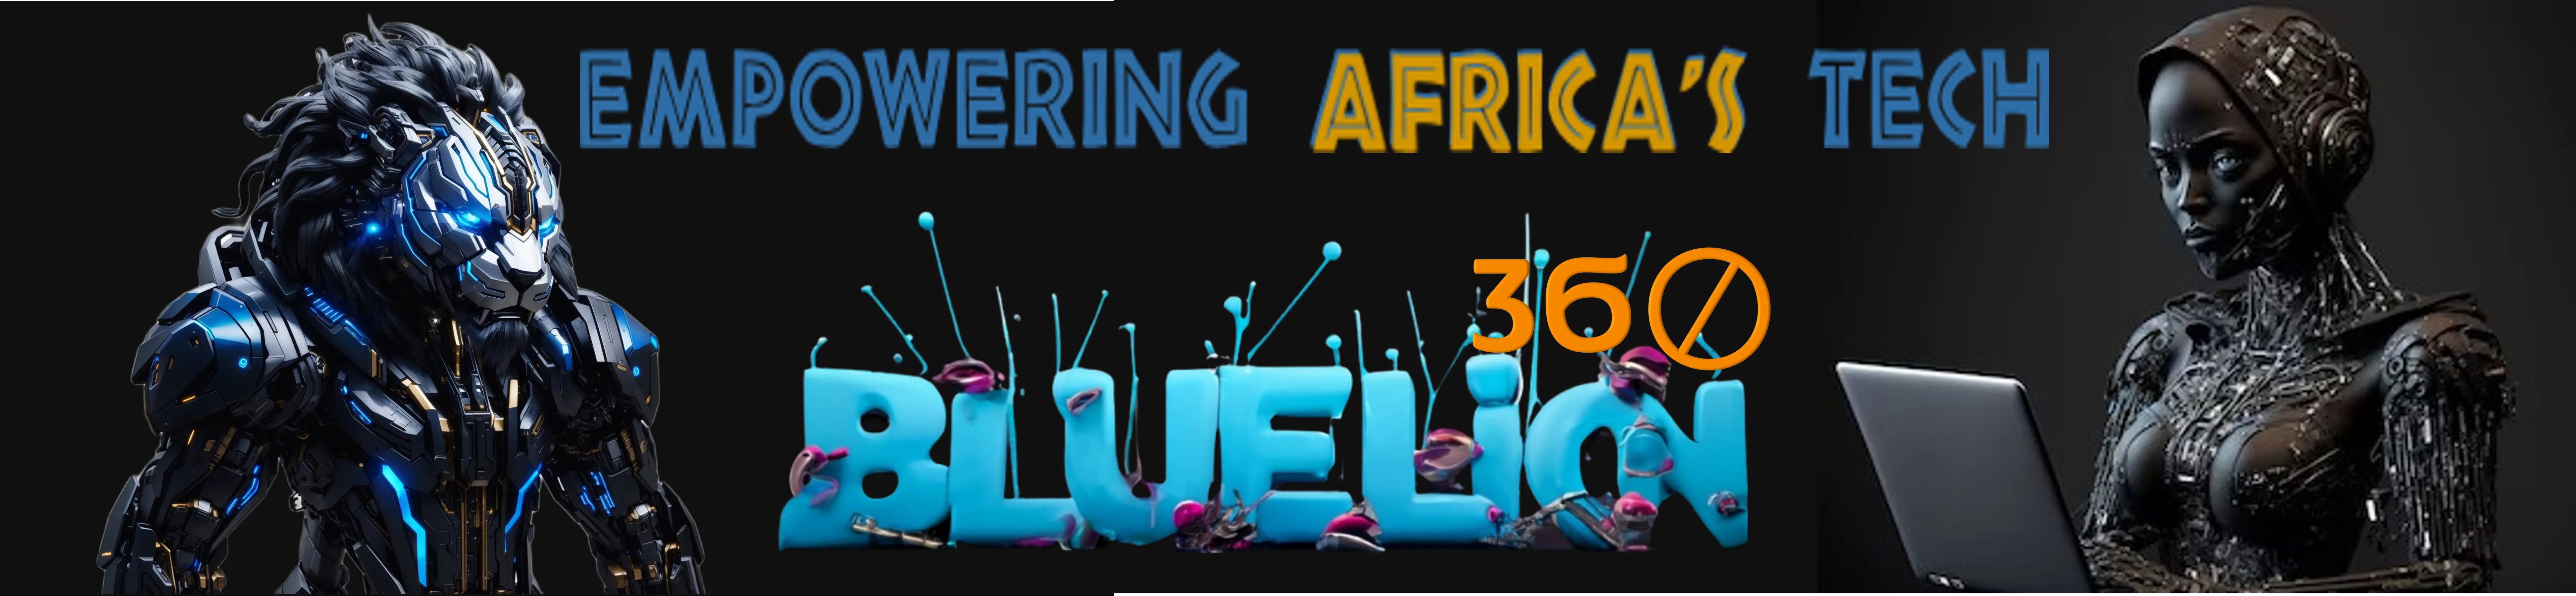 Empowering Africa Tech Bluelion 360